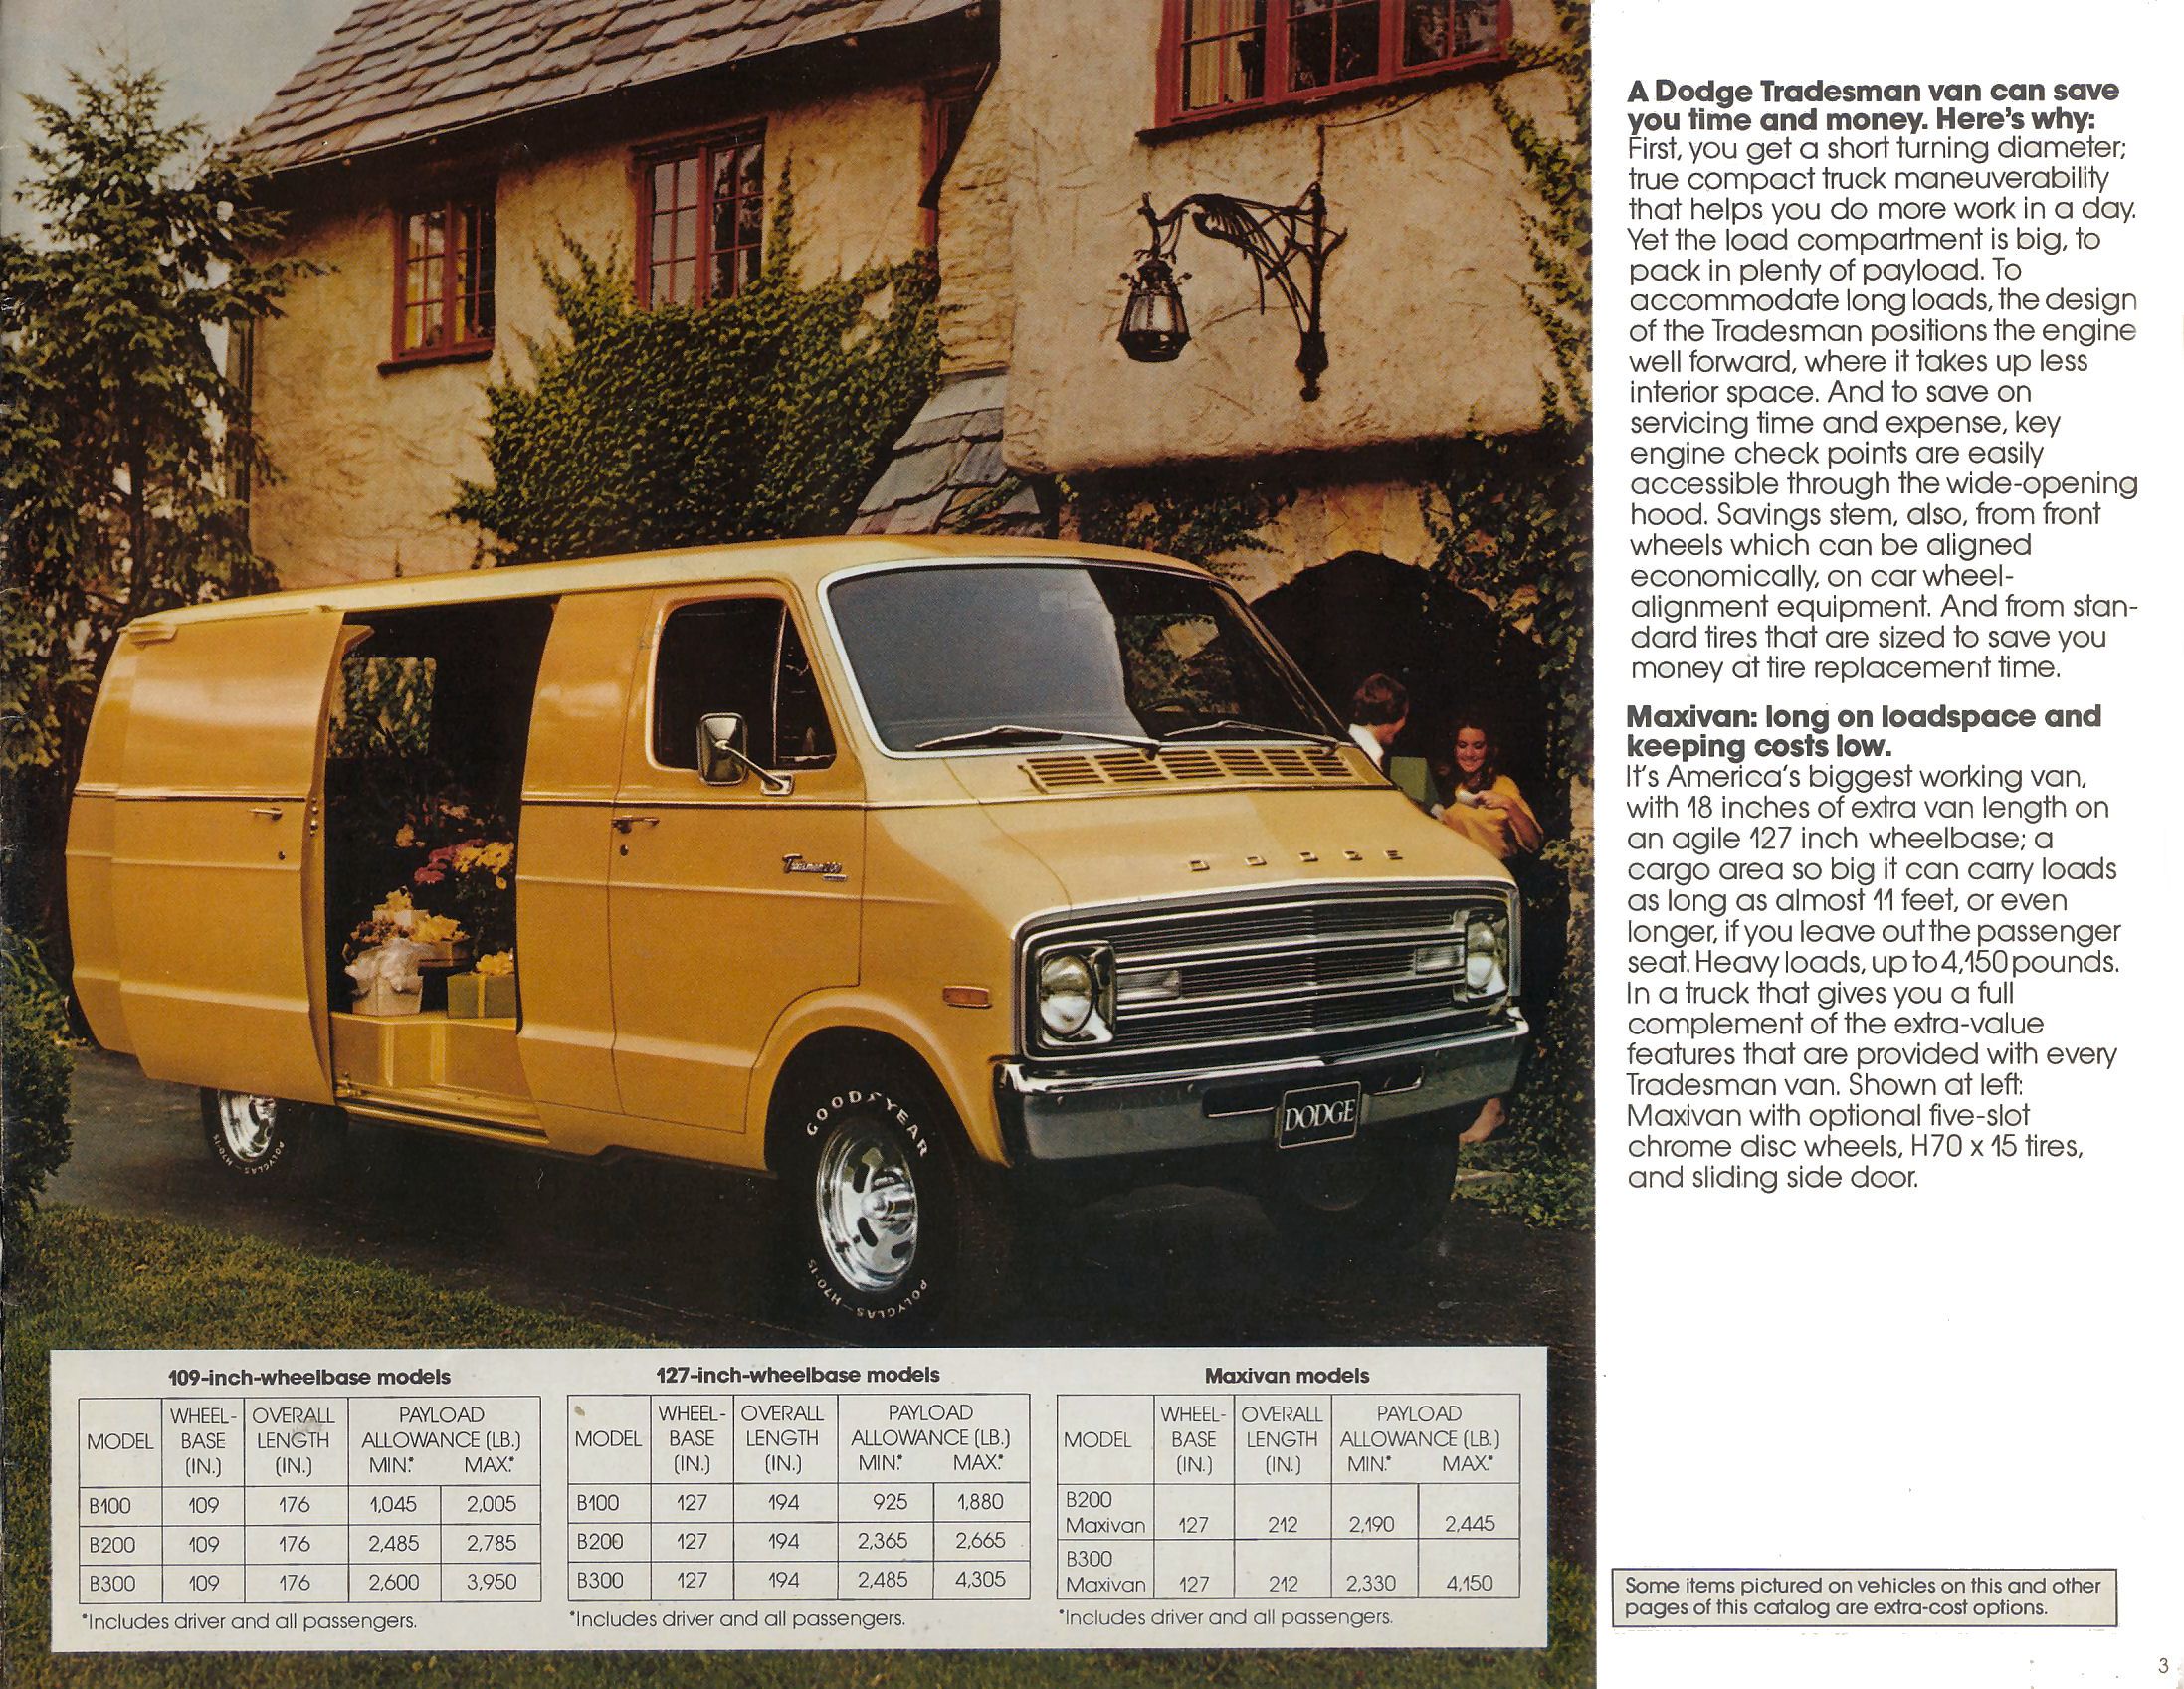 1977_Dodge_Tradesman_Vans-03